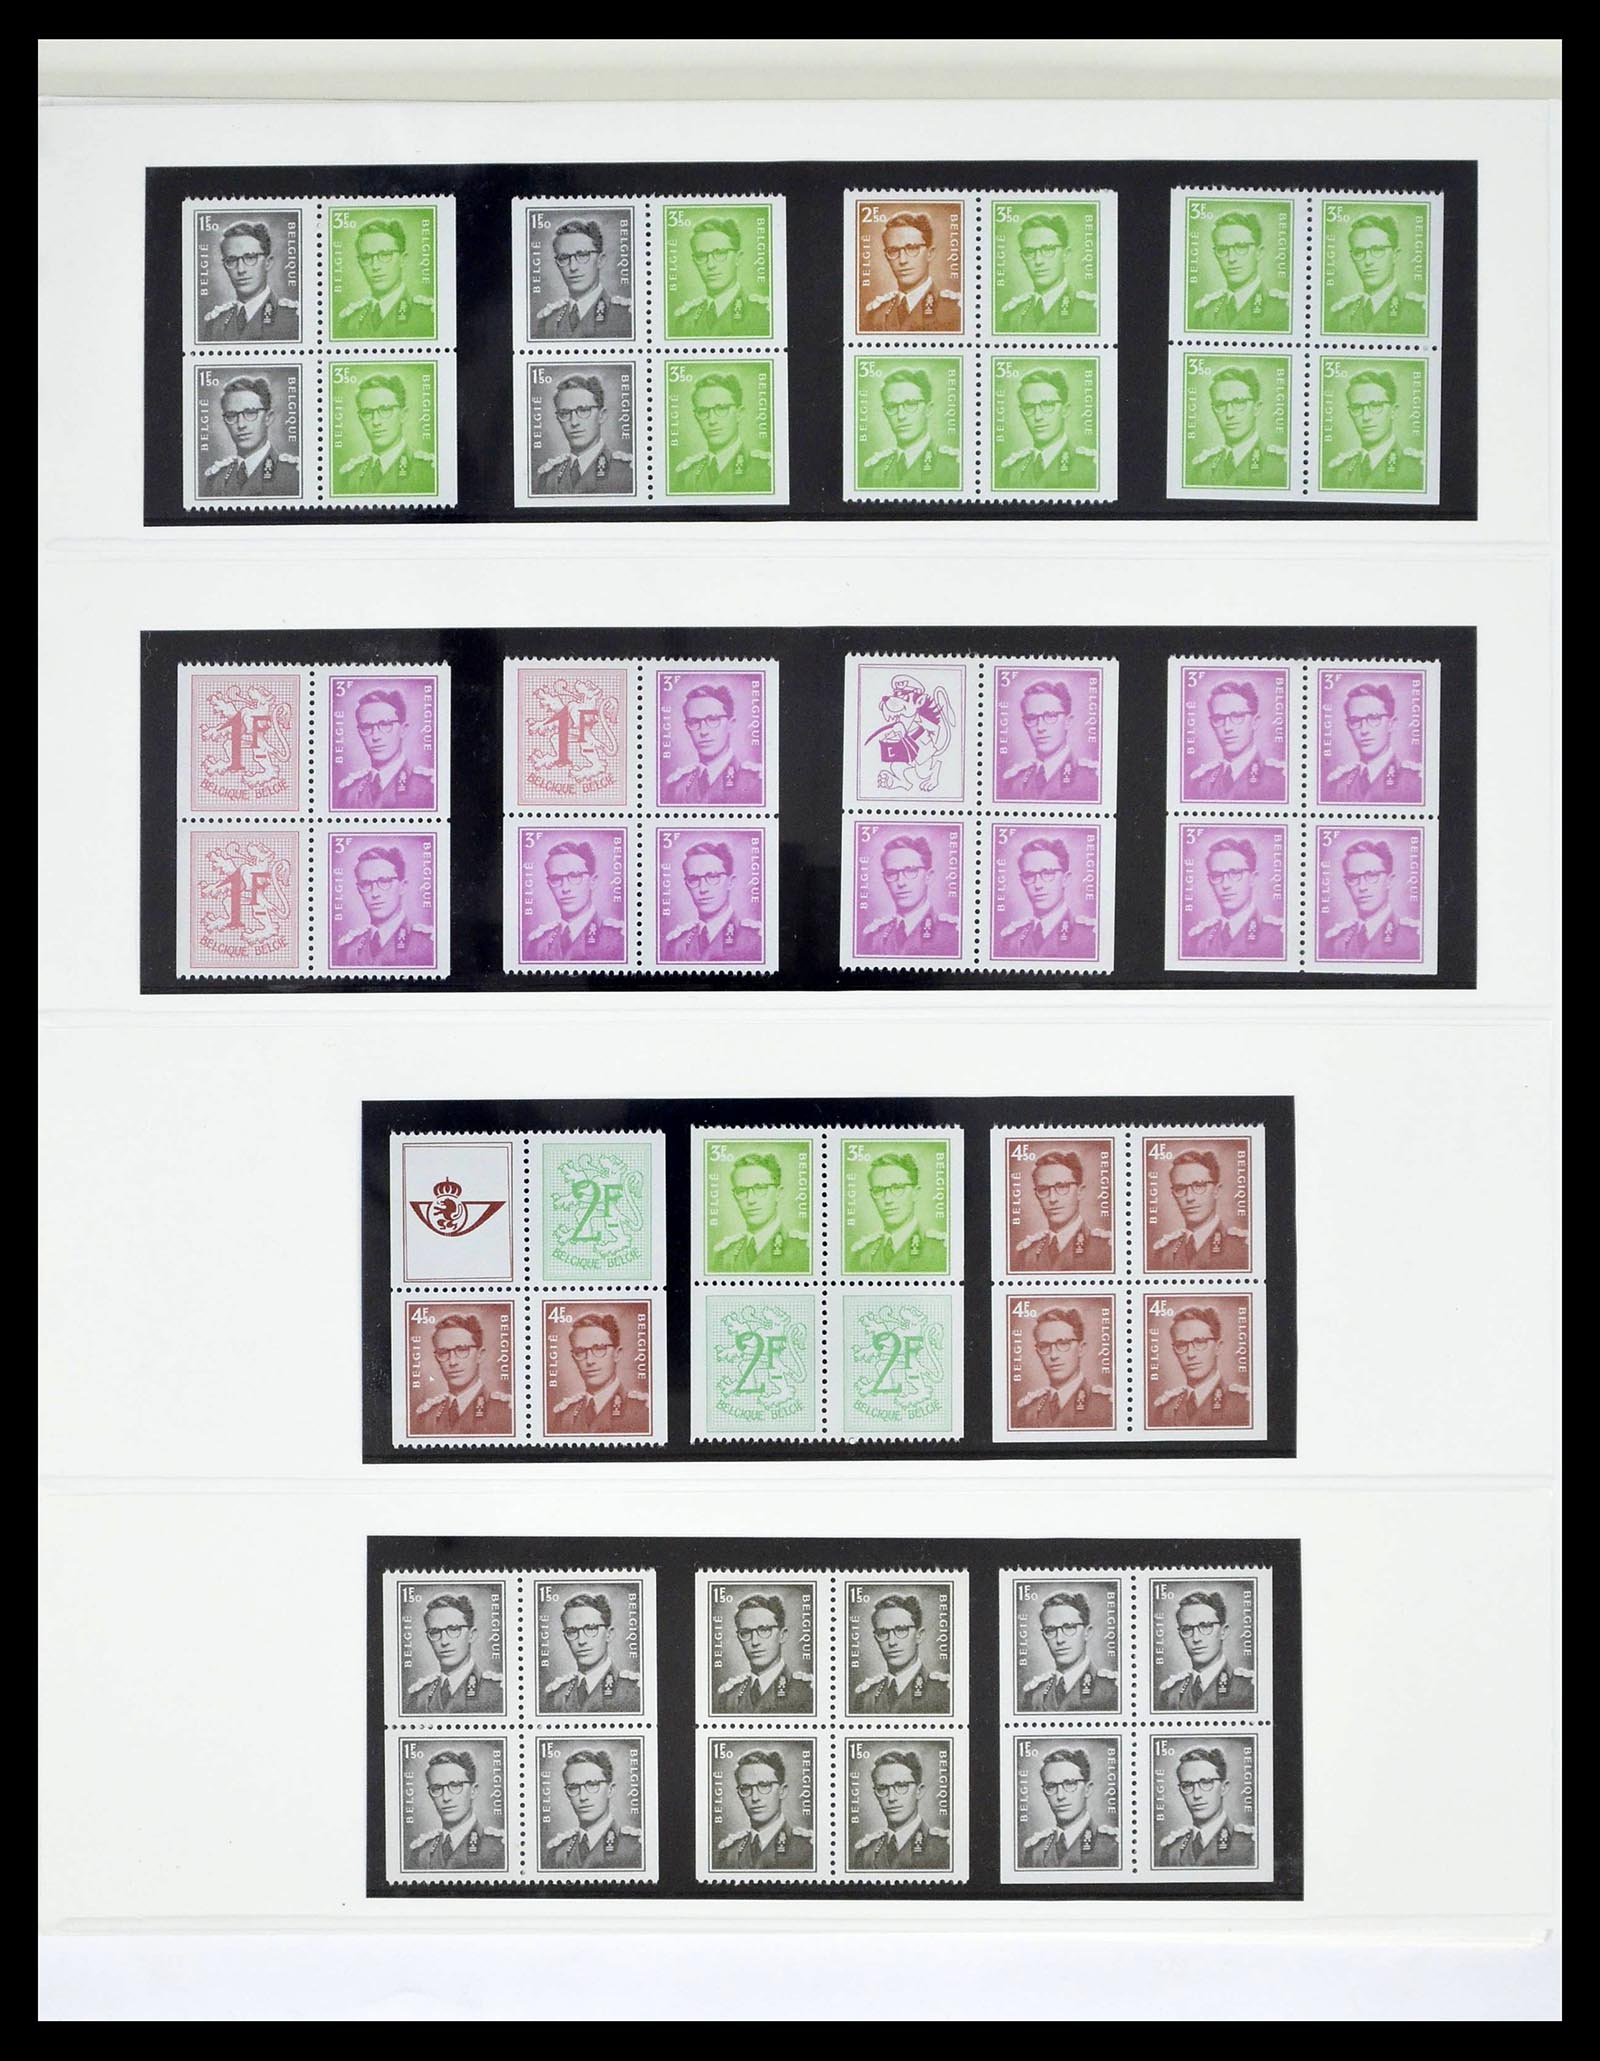 39229 0052 - Stamp collection 39229 Belgium Boudewijn with glasses 1952-1975.